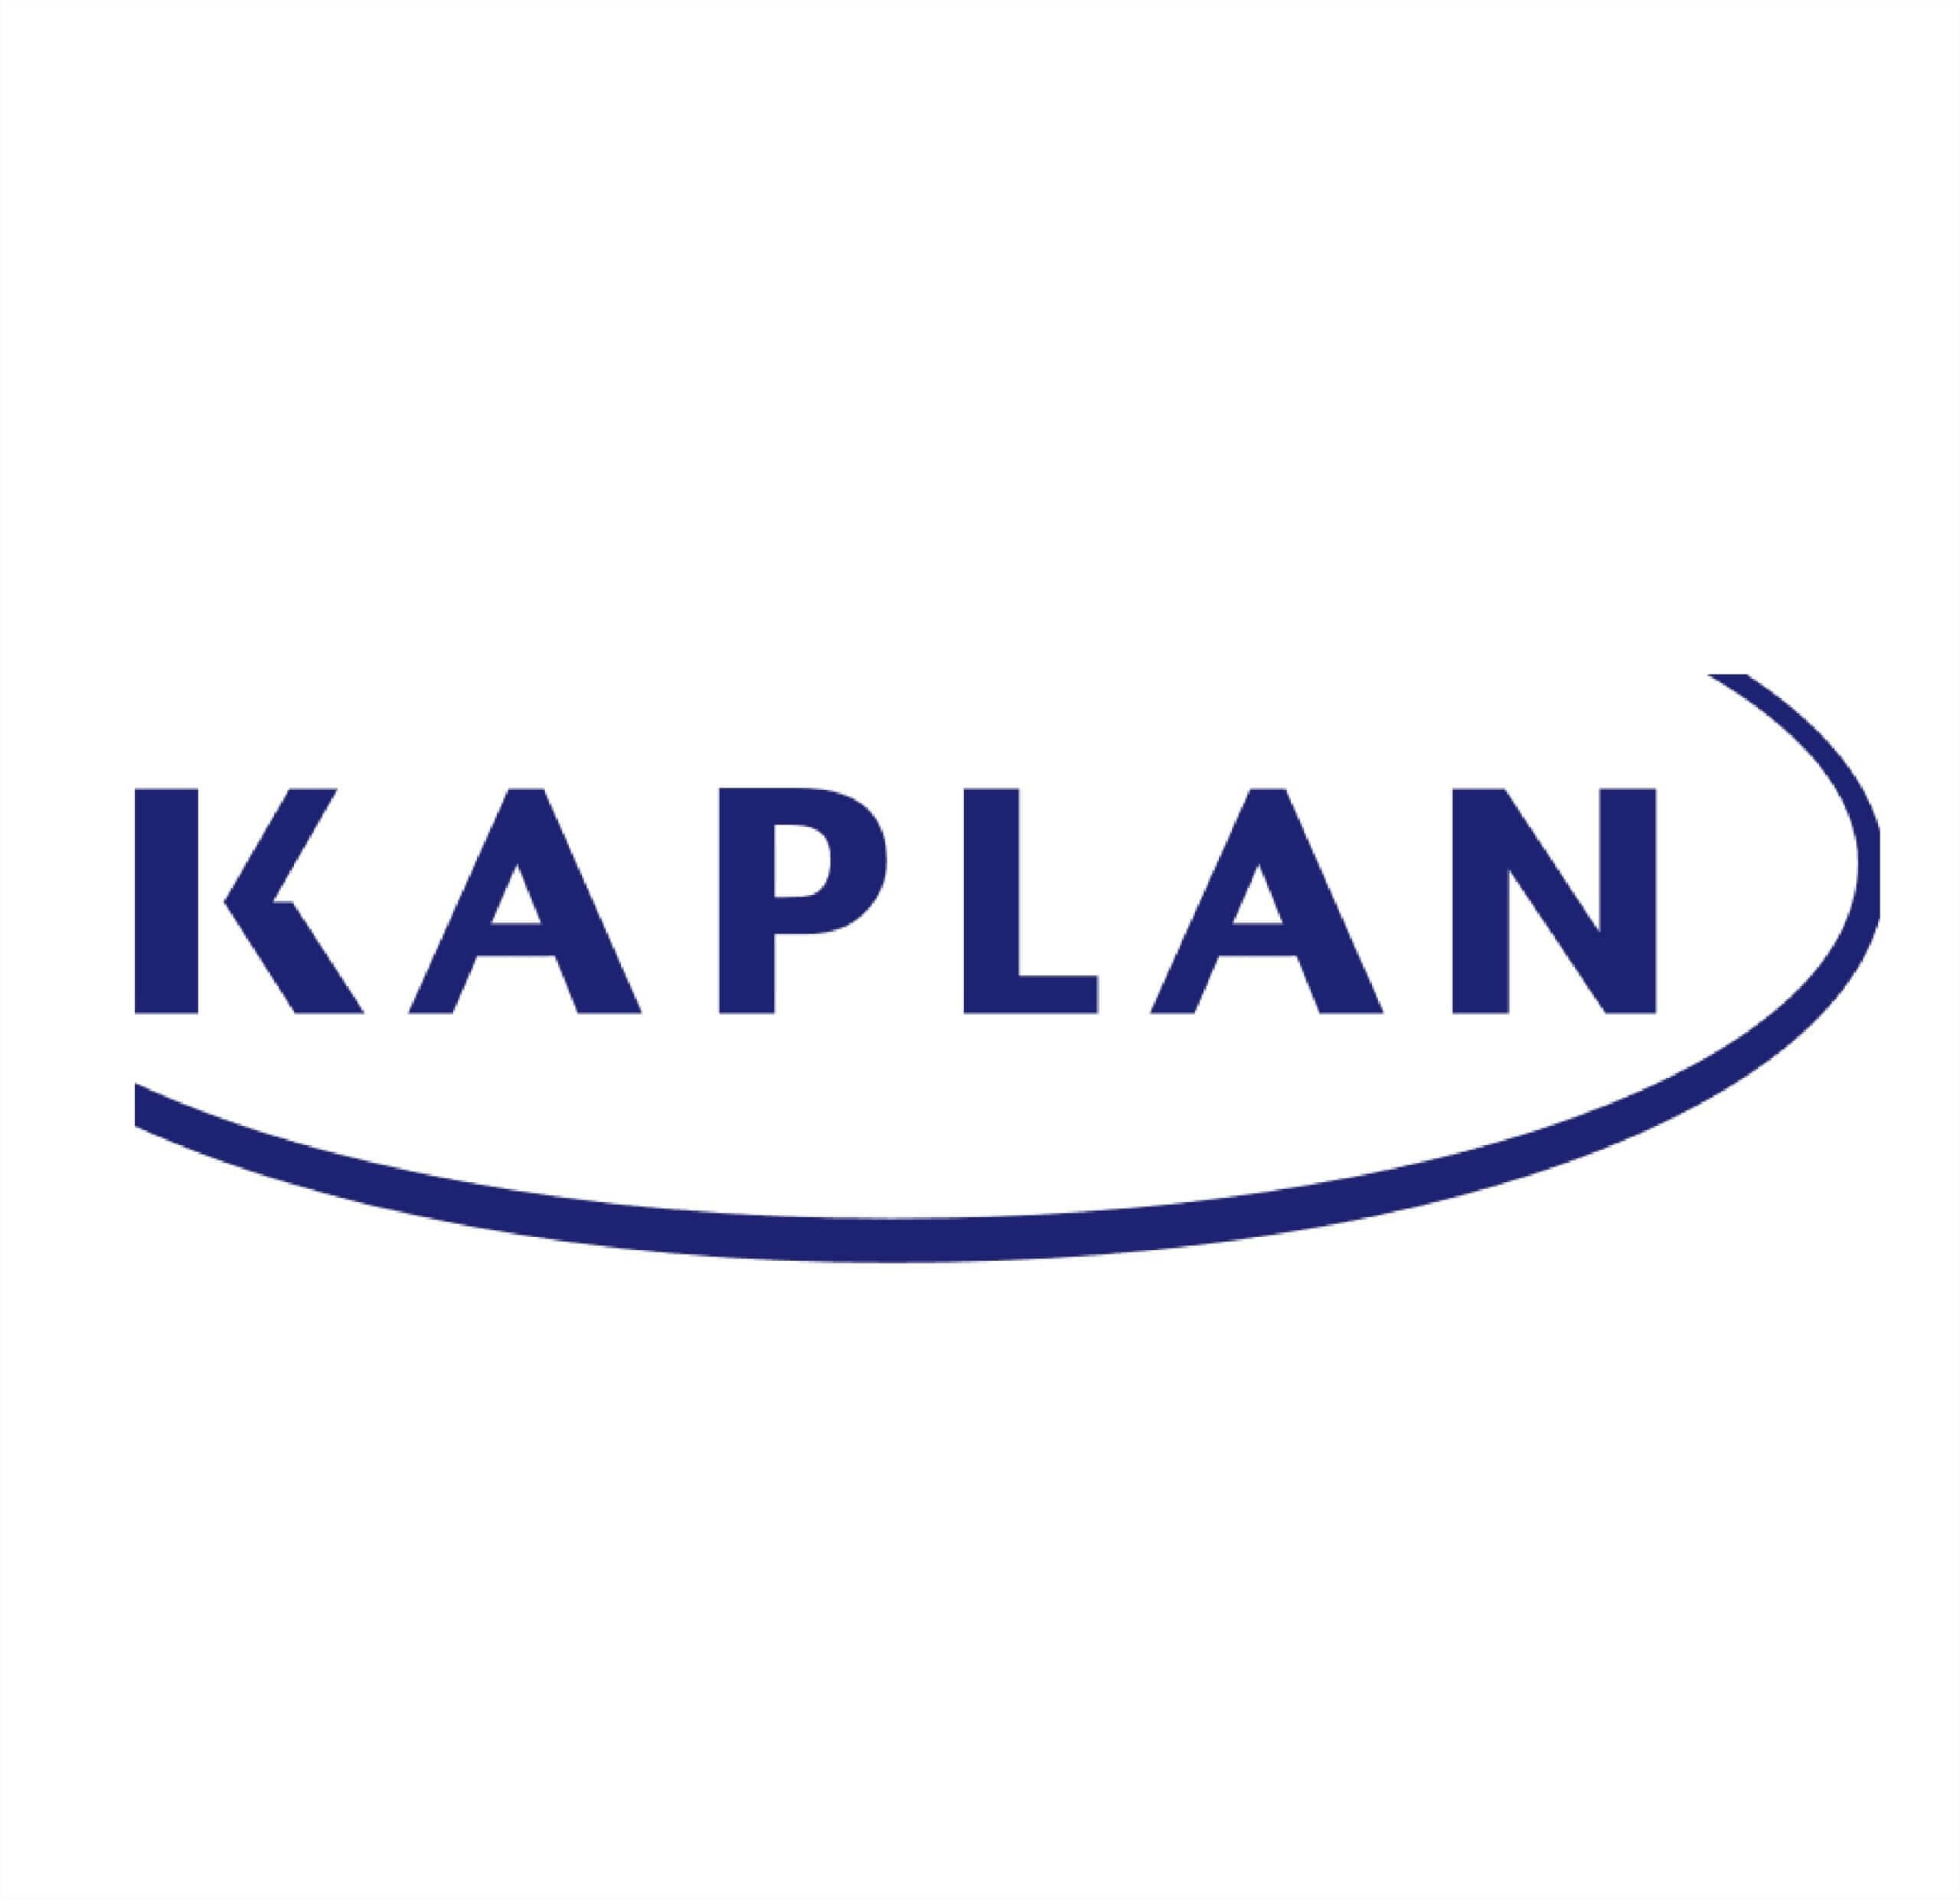 Kaplan press release – Kaplan acquires Red Marker